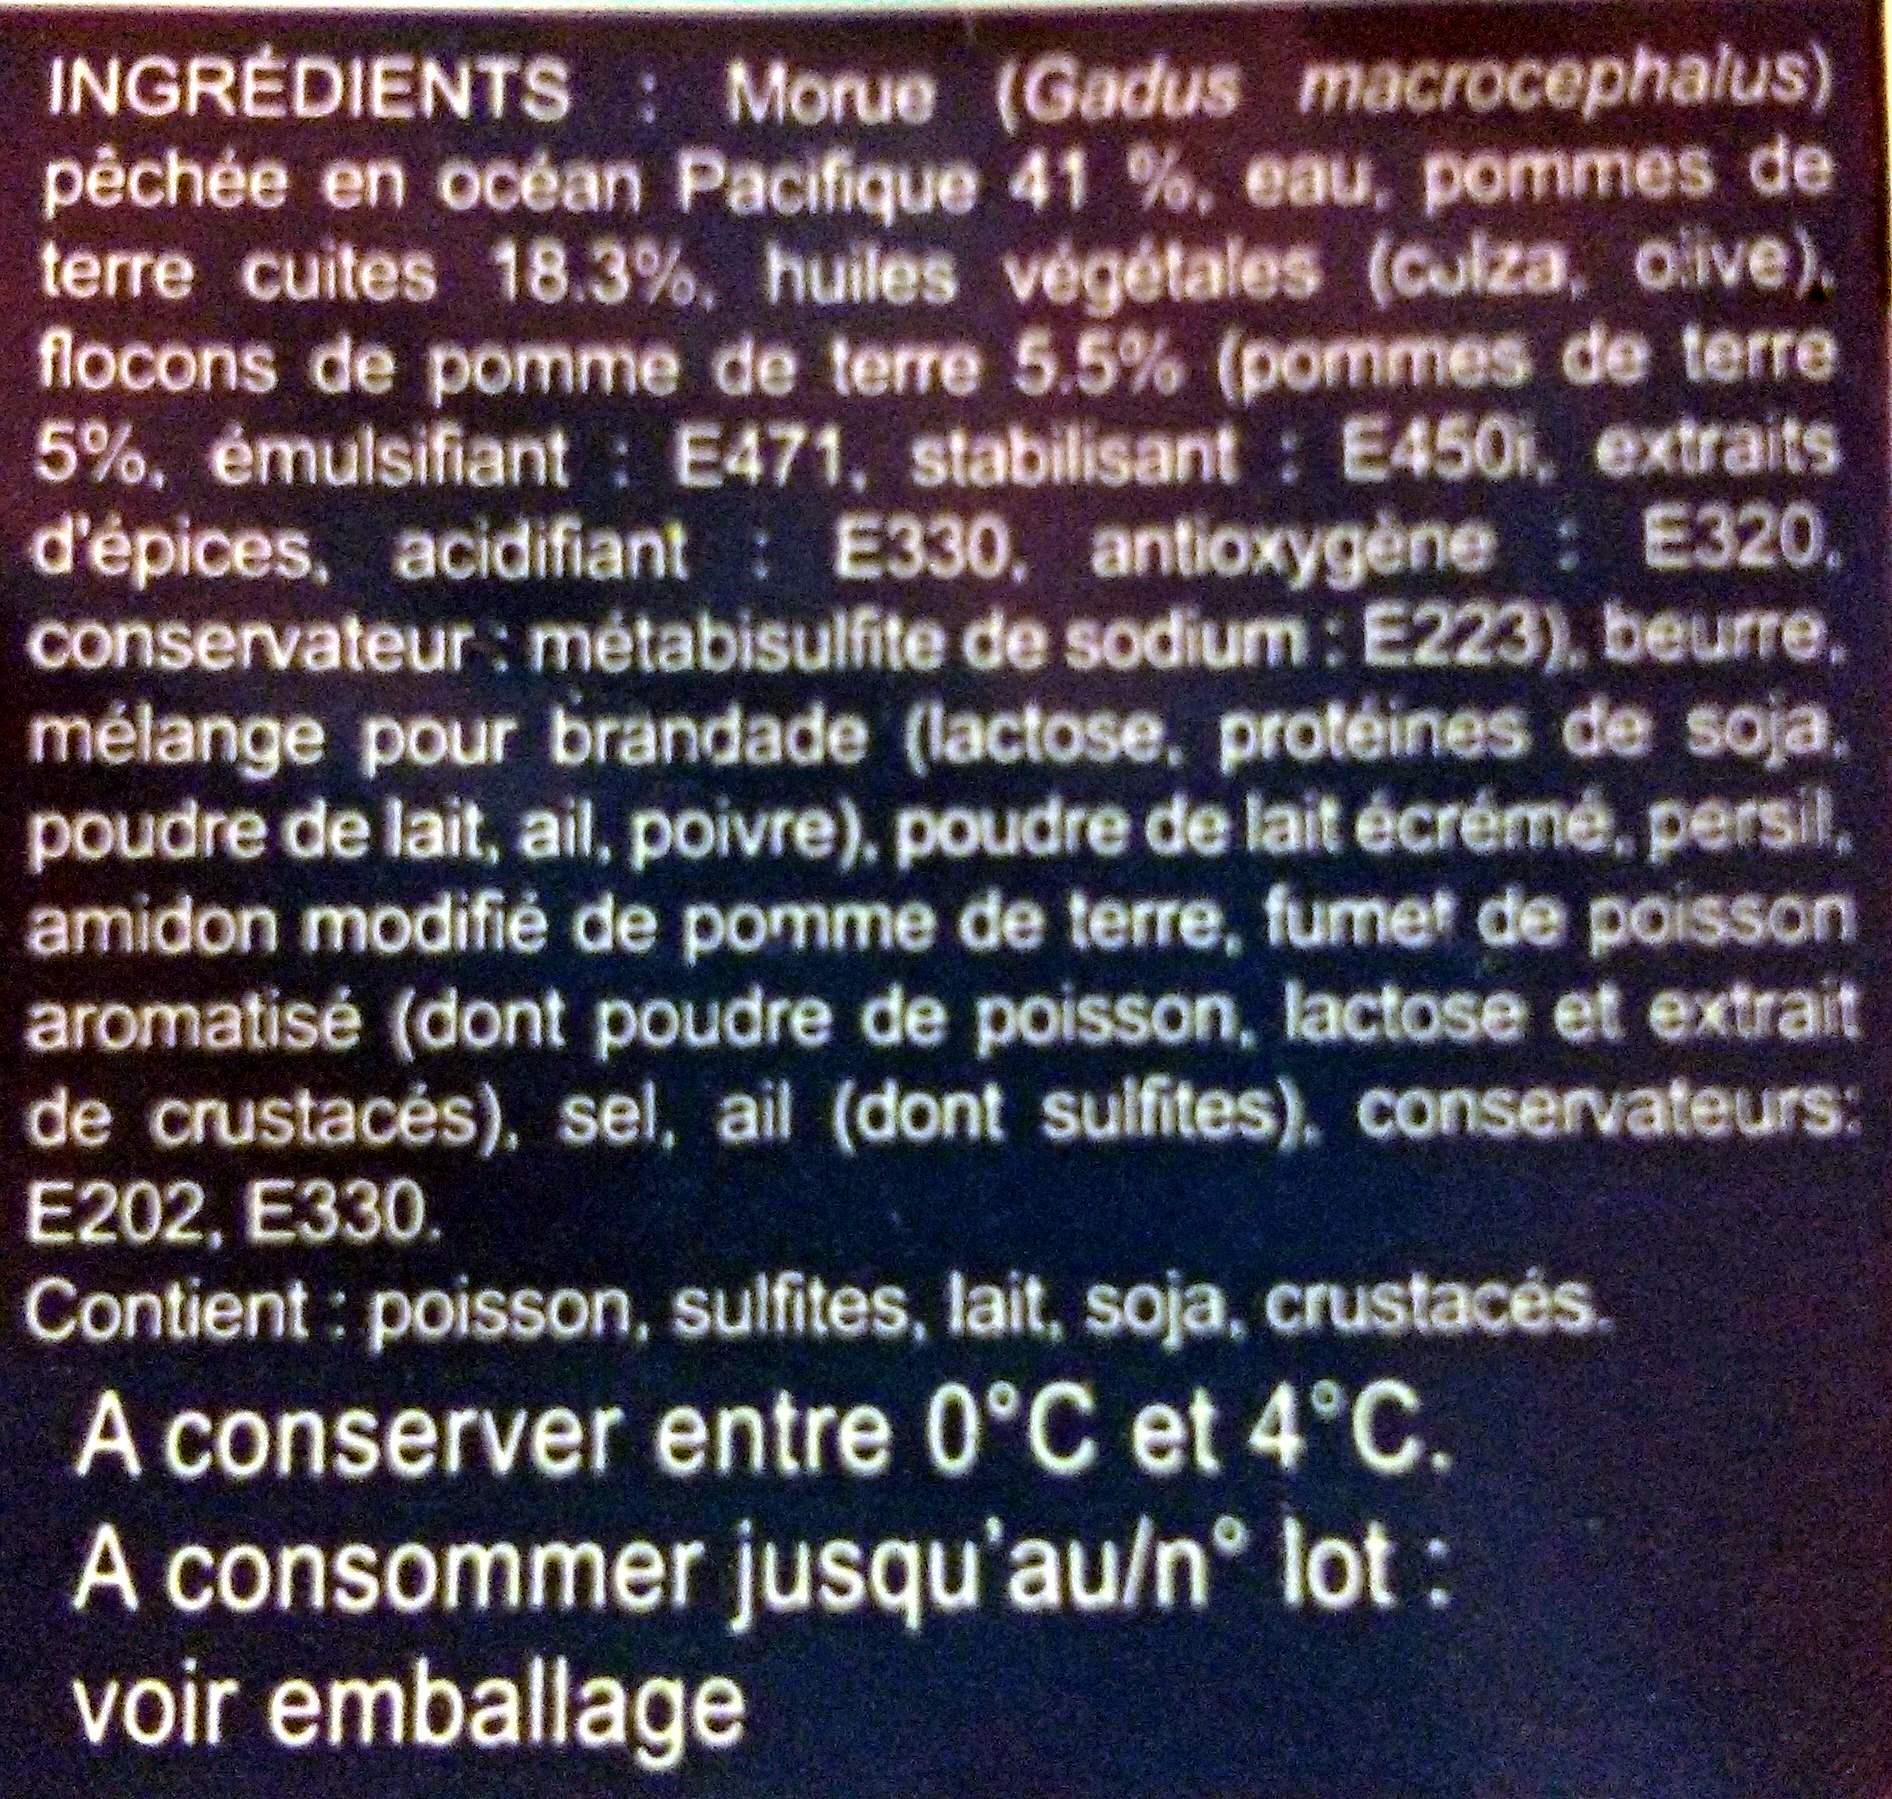 Brandade de Morue Parmentière - Ingredients - fr